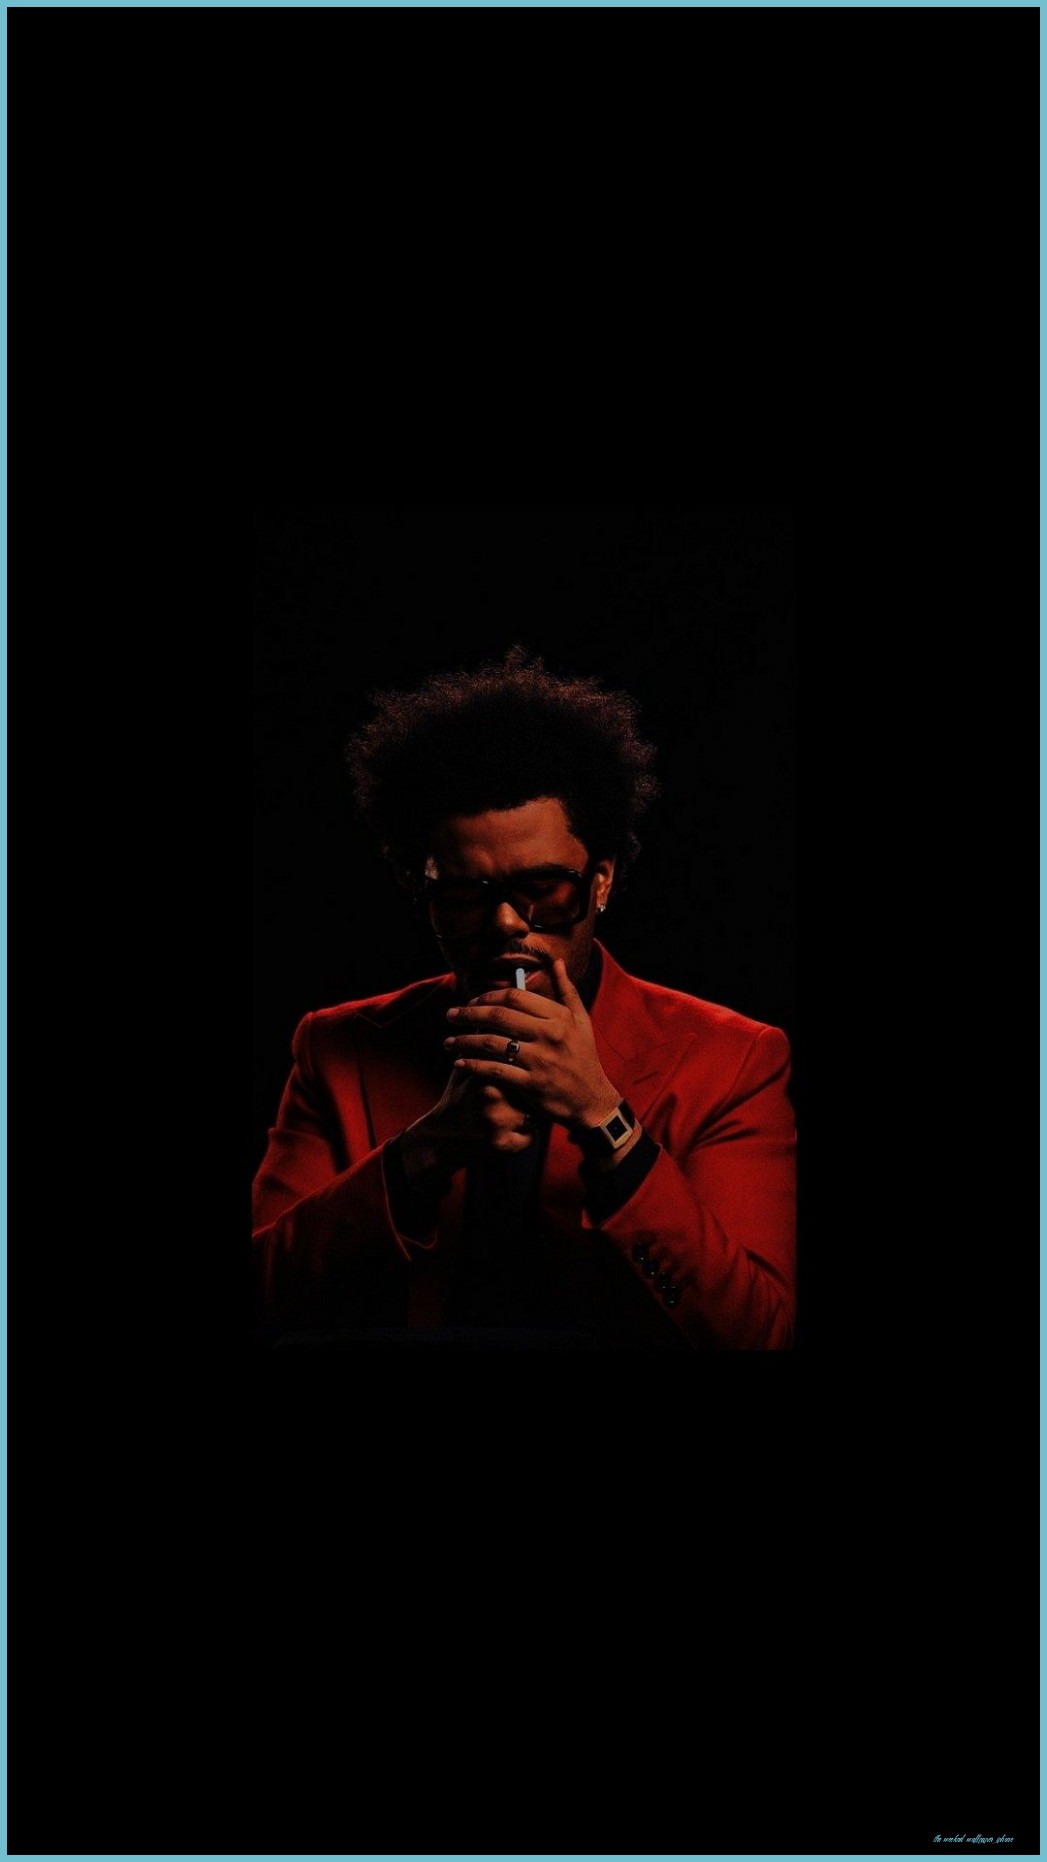 The Weeknd The Weeknd Background, The Weeknd Poster, The Weeknd Weeknd Wallpaper iPhone